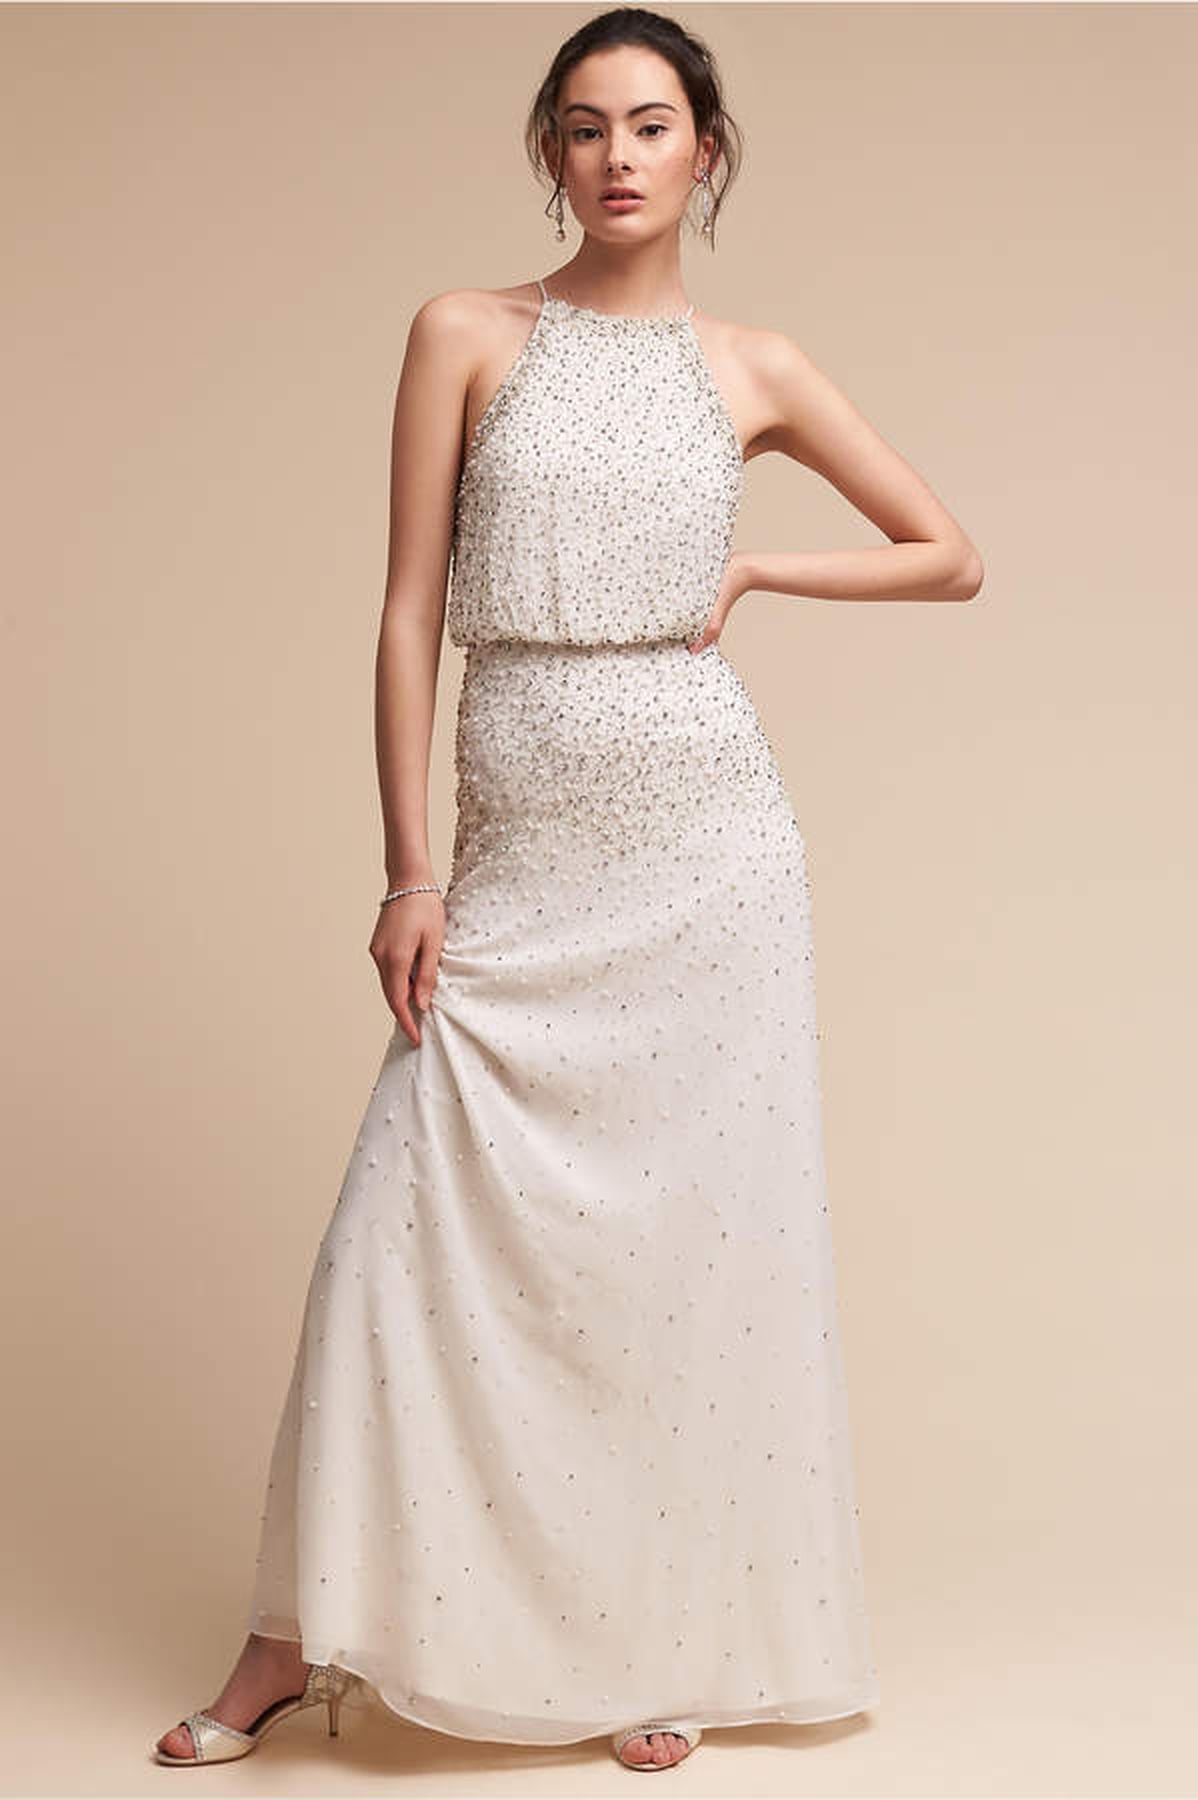 Dakota Johnsons White Dress At Fifty Shades Freed Premiere Popsugar Fashion 